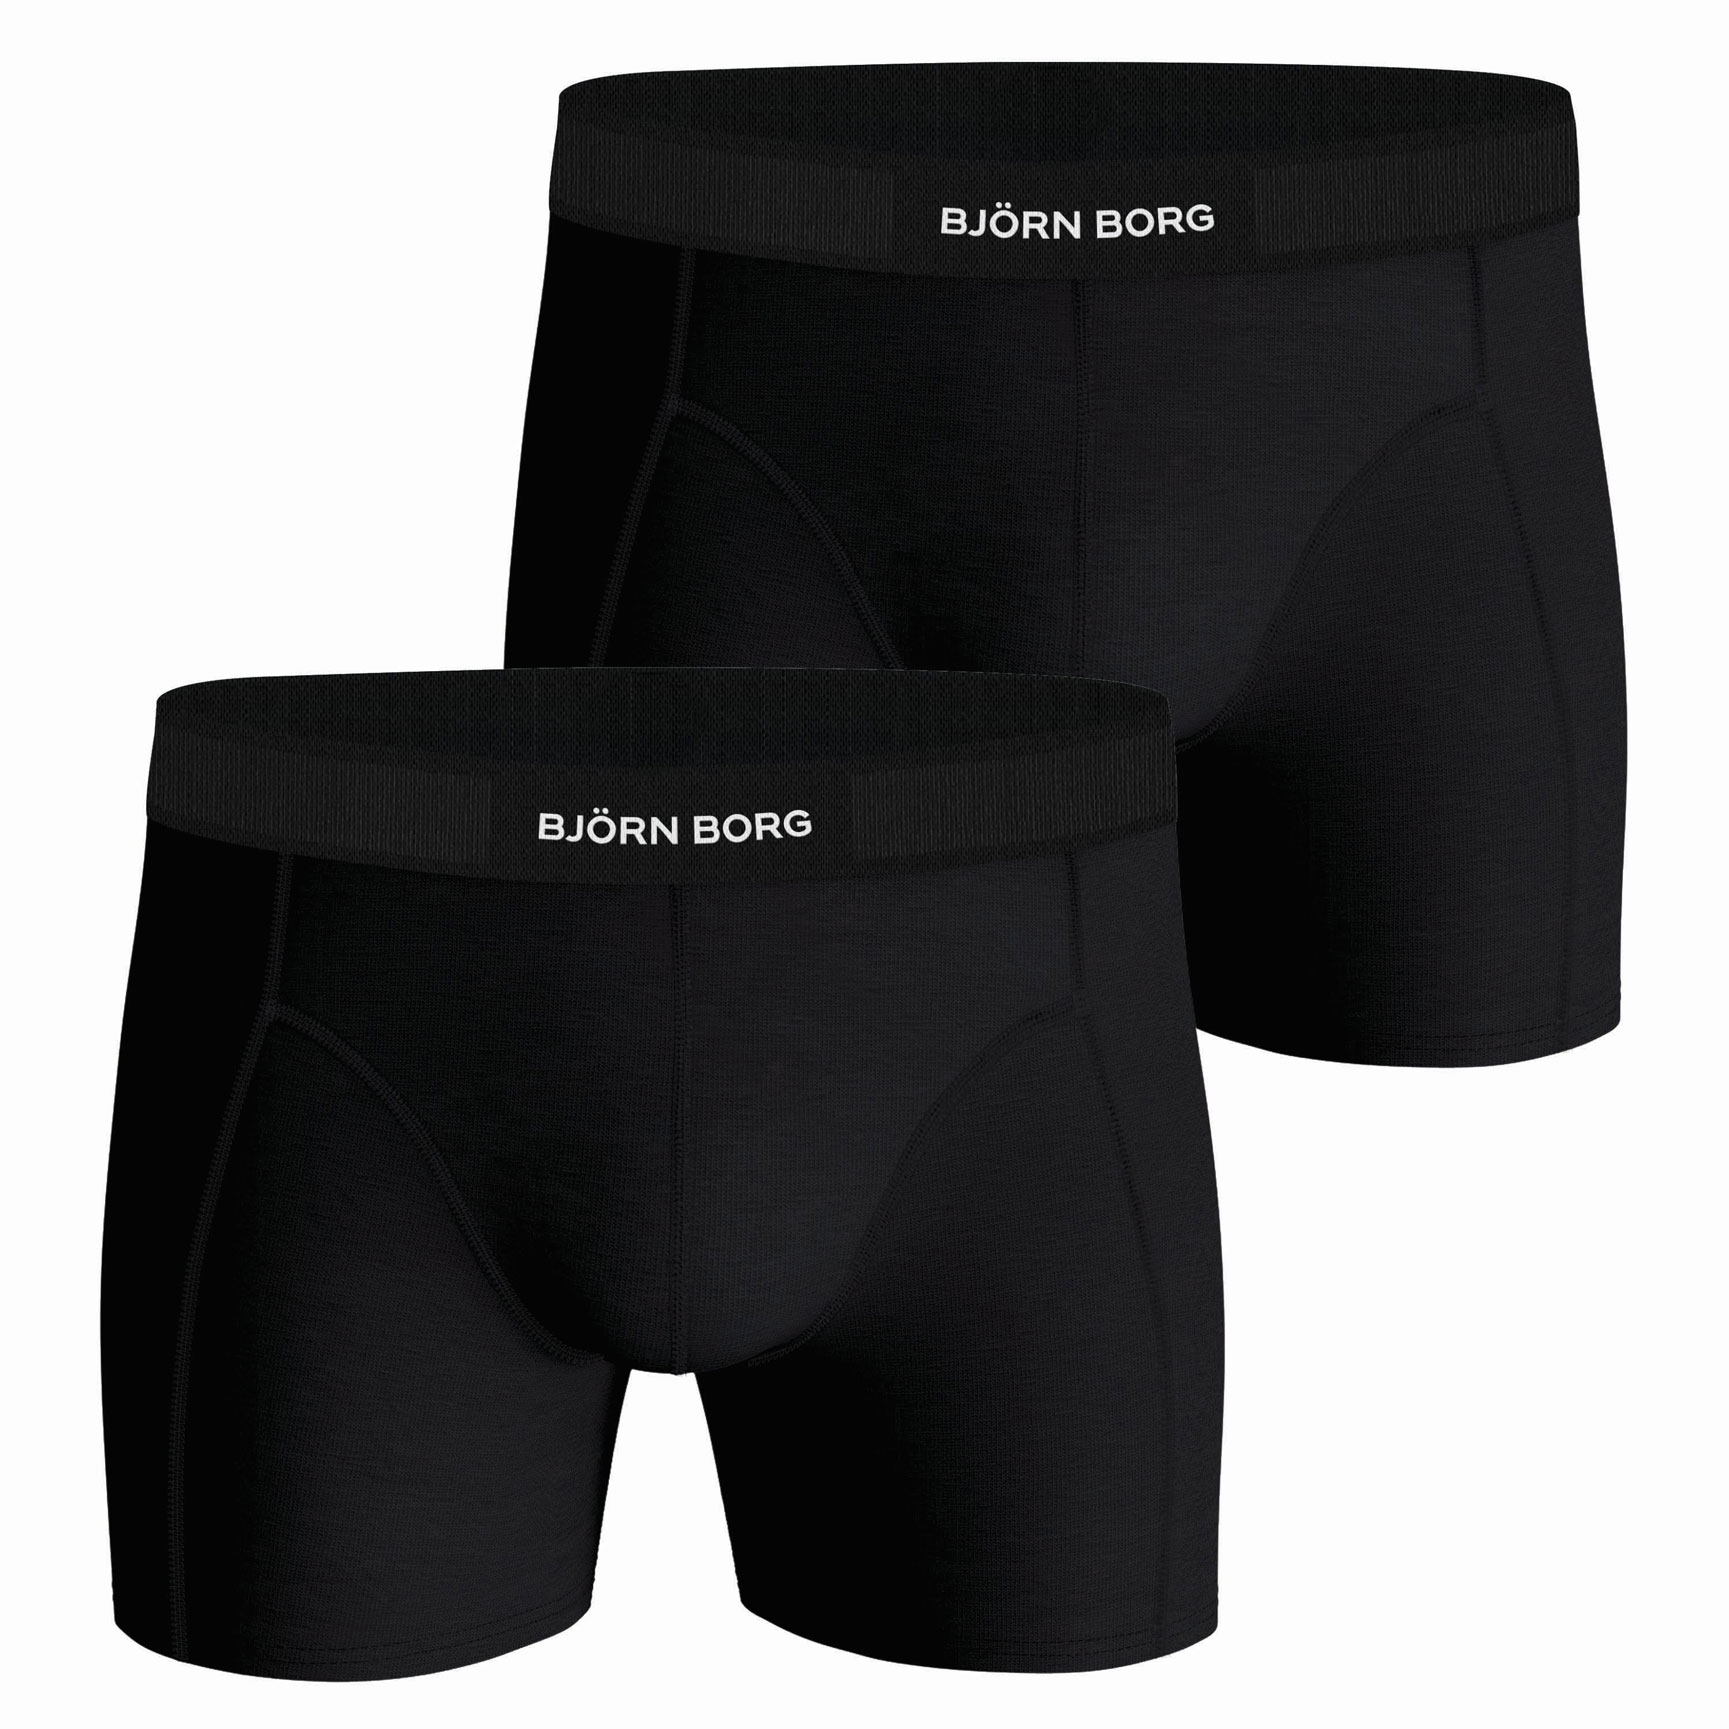 Bjorn Borg Boxershort premium cotton zwart 2-pa